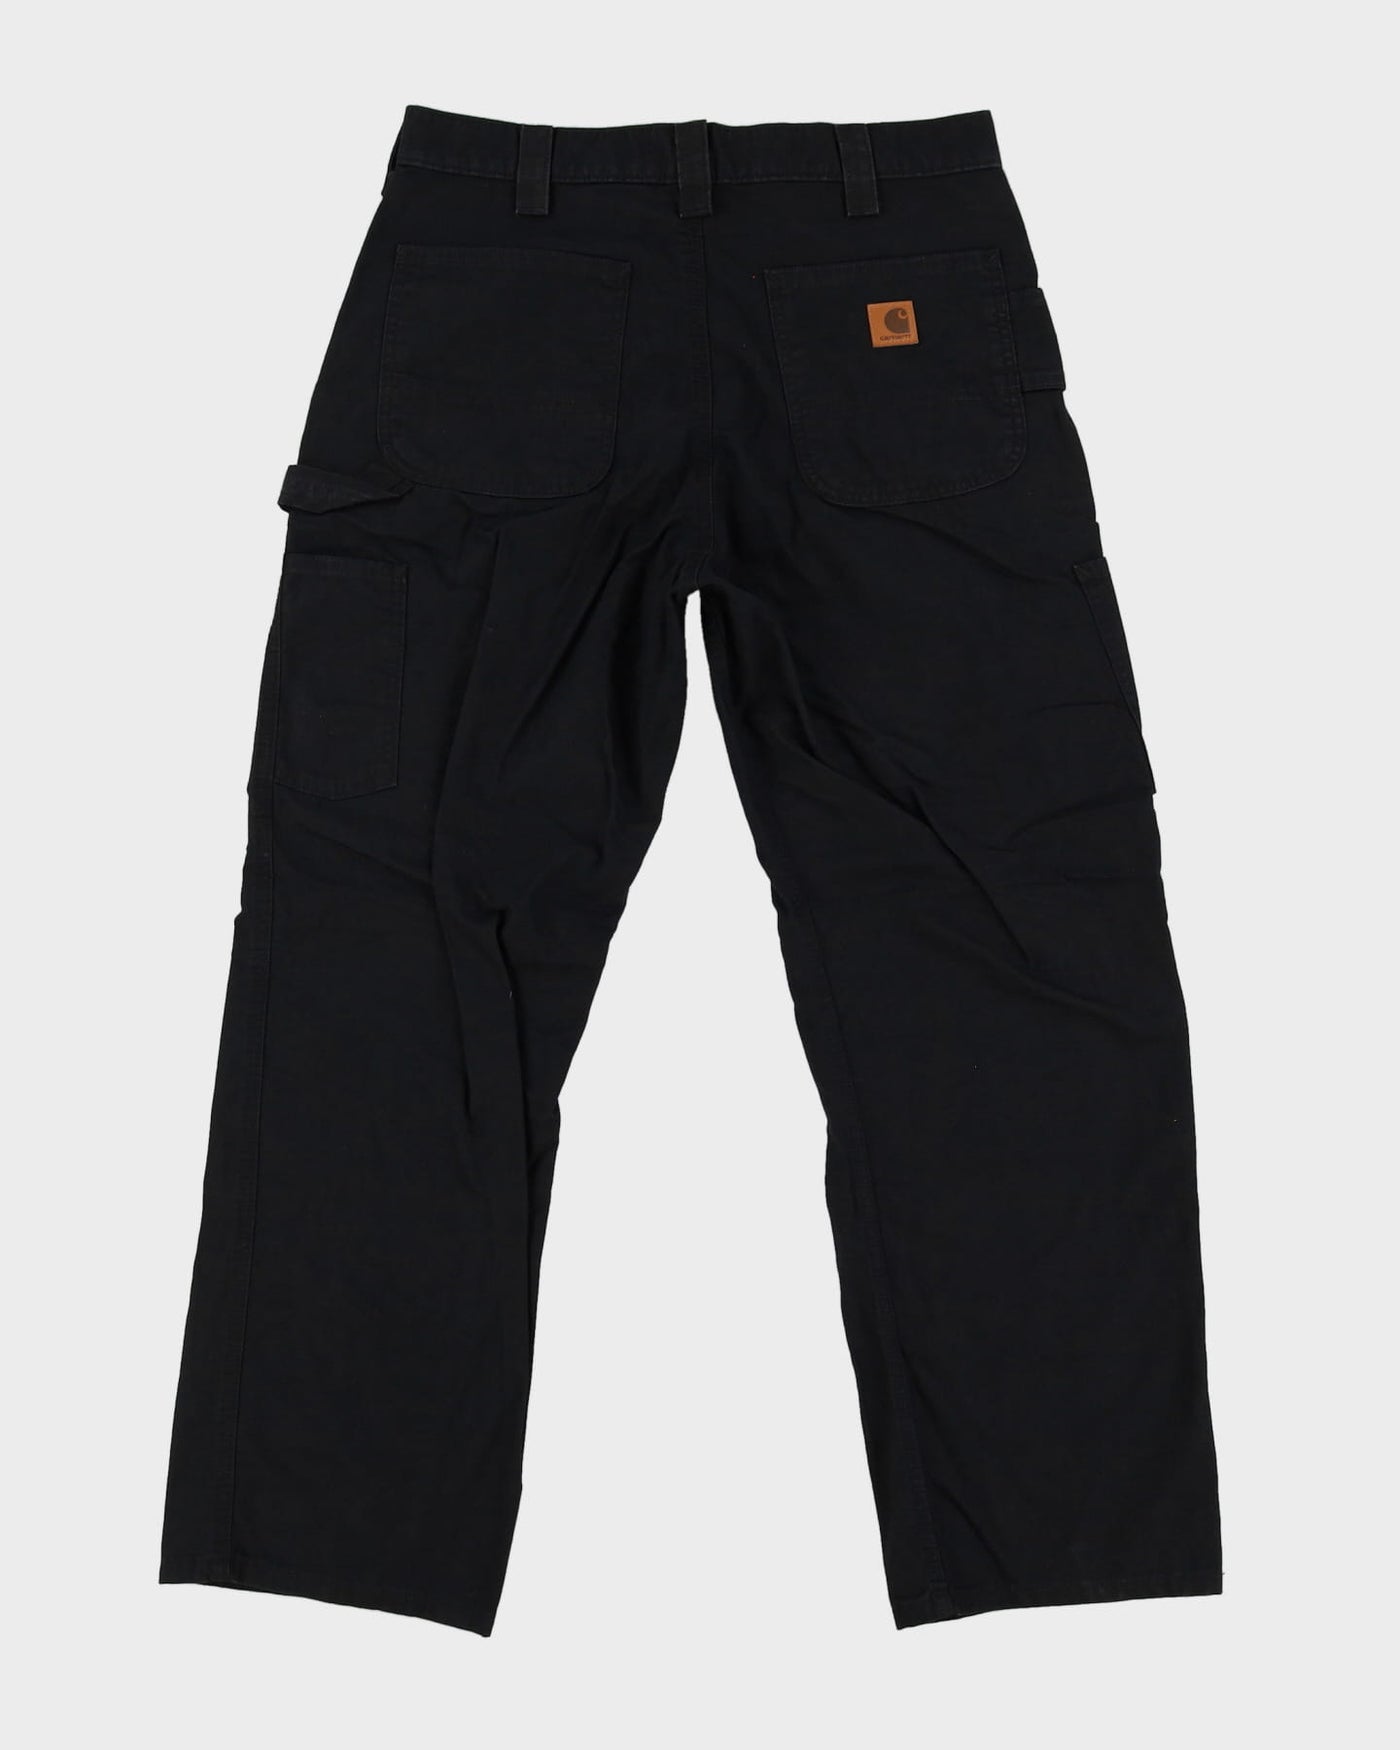 Vintage 90s Carhartt Black Workwear Trousers / Jeans - W34 L30